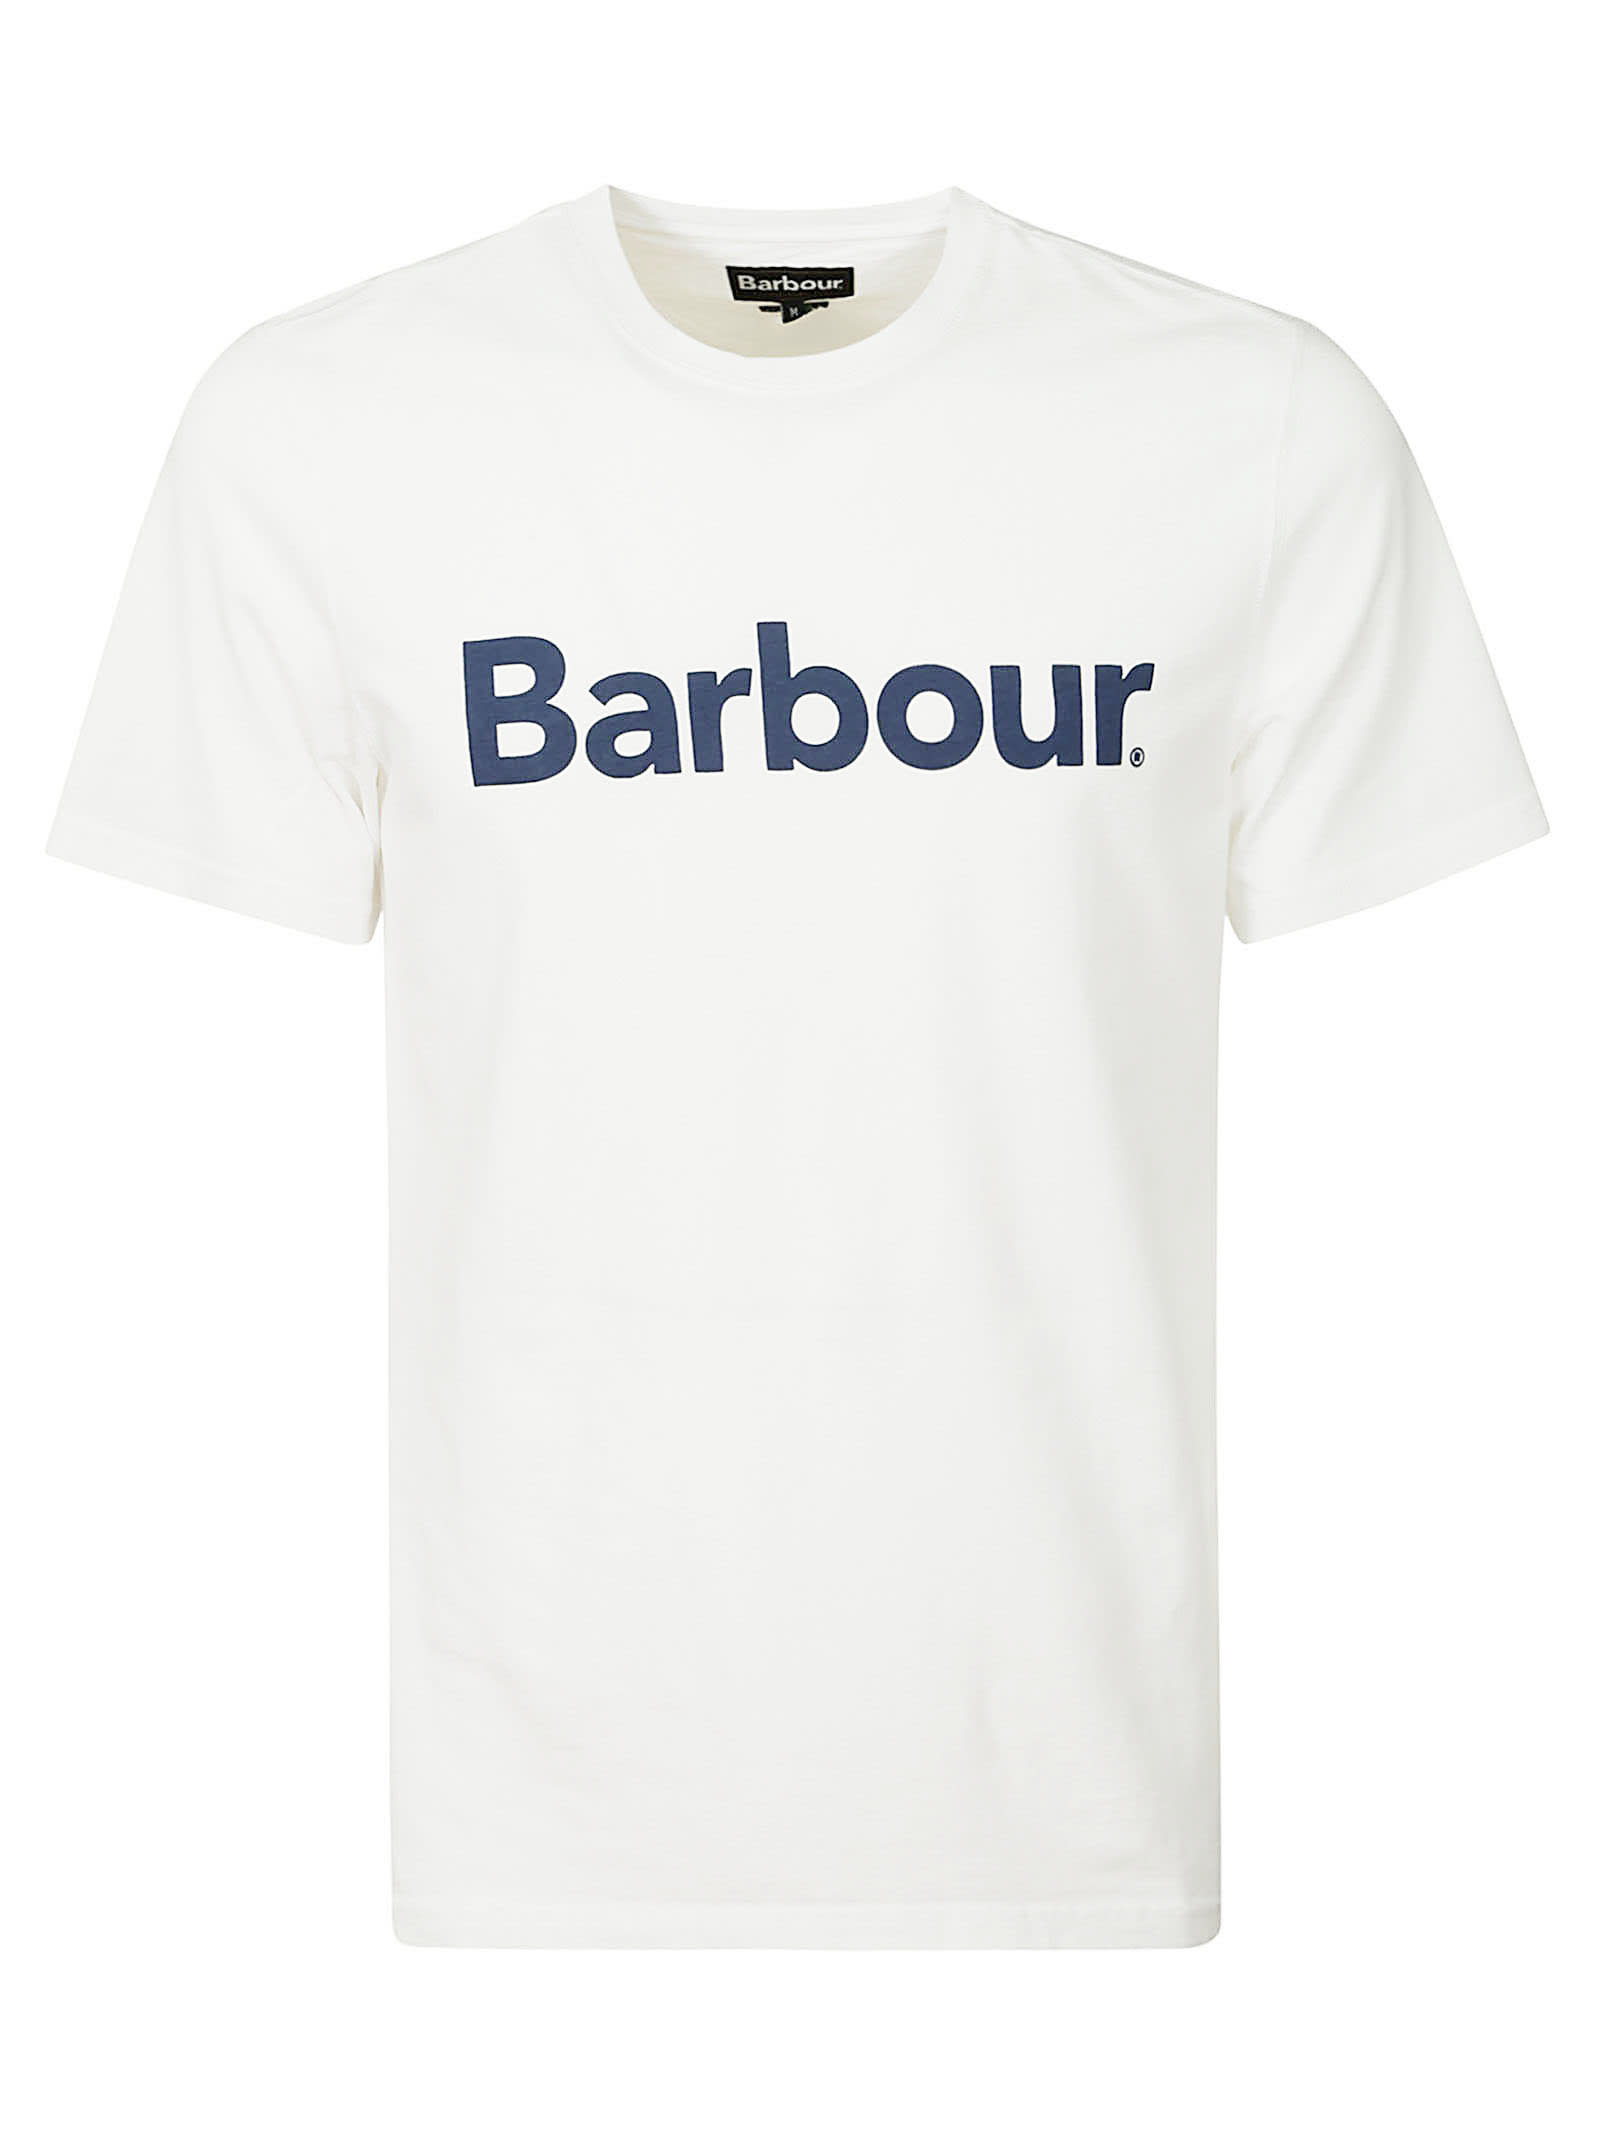 Barbour Logo Tee